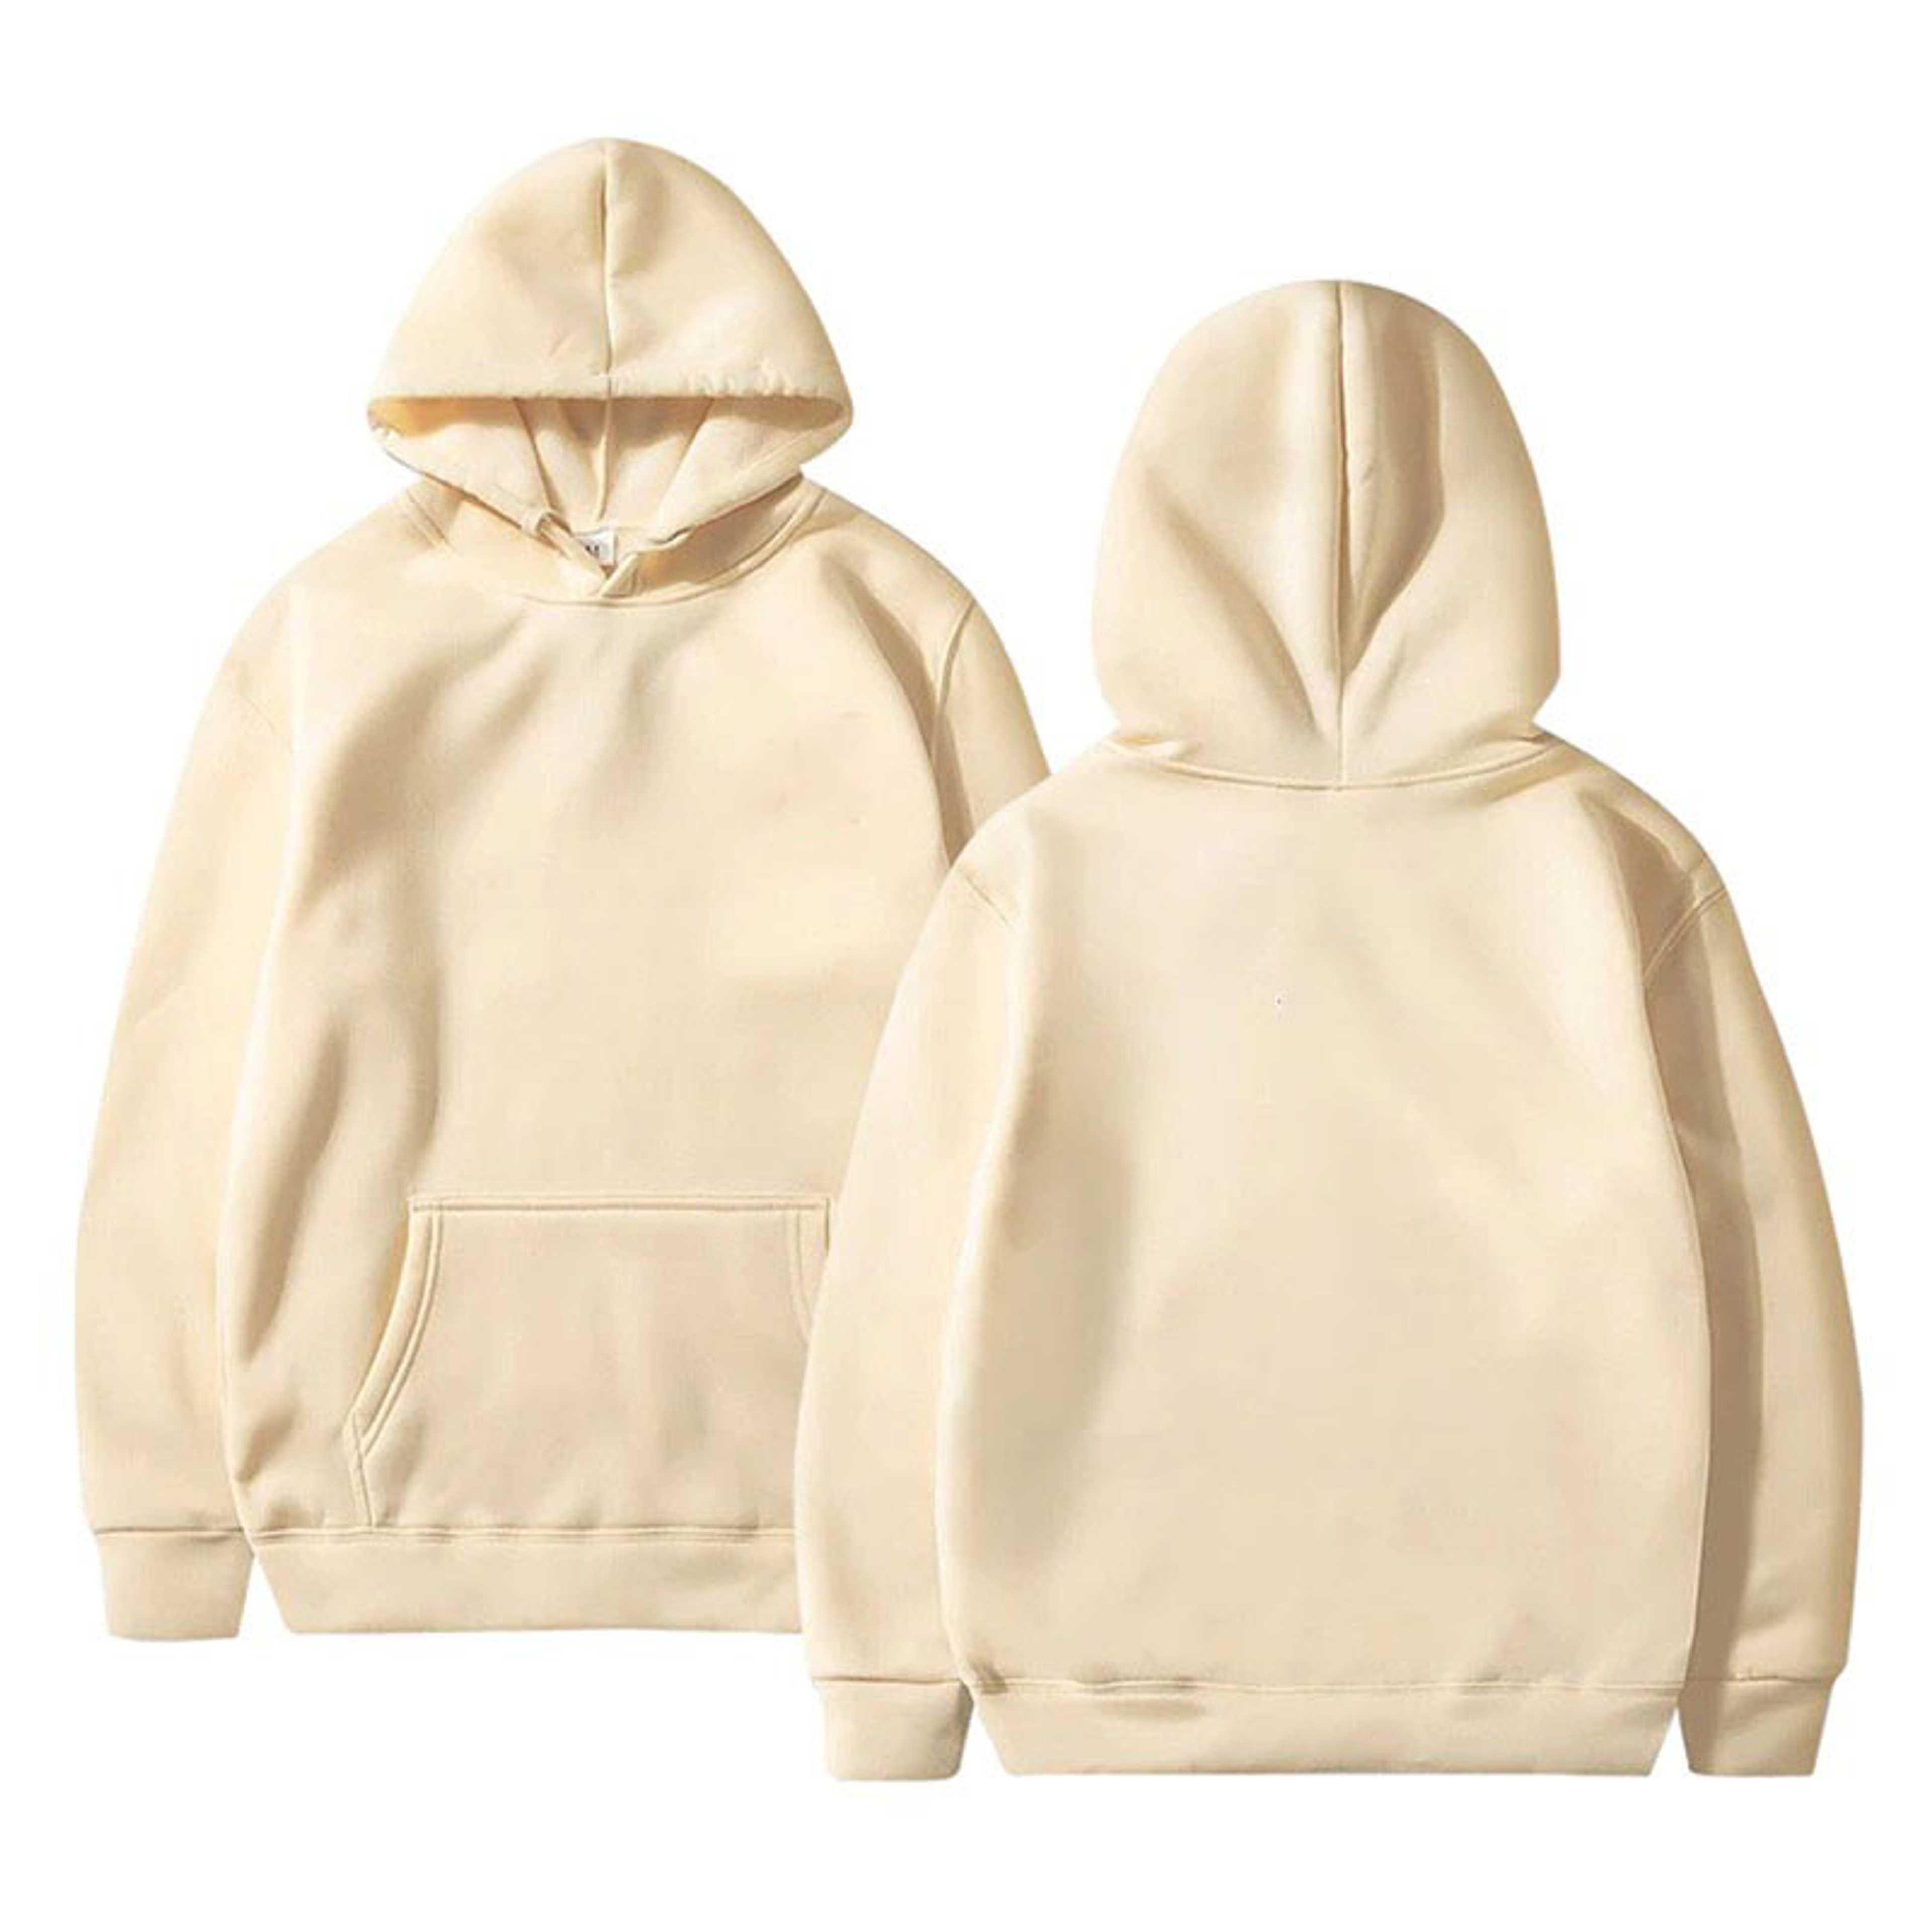 New best quality hoodie